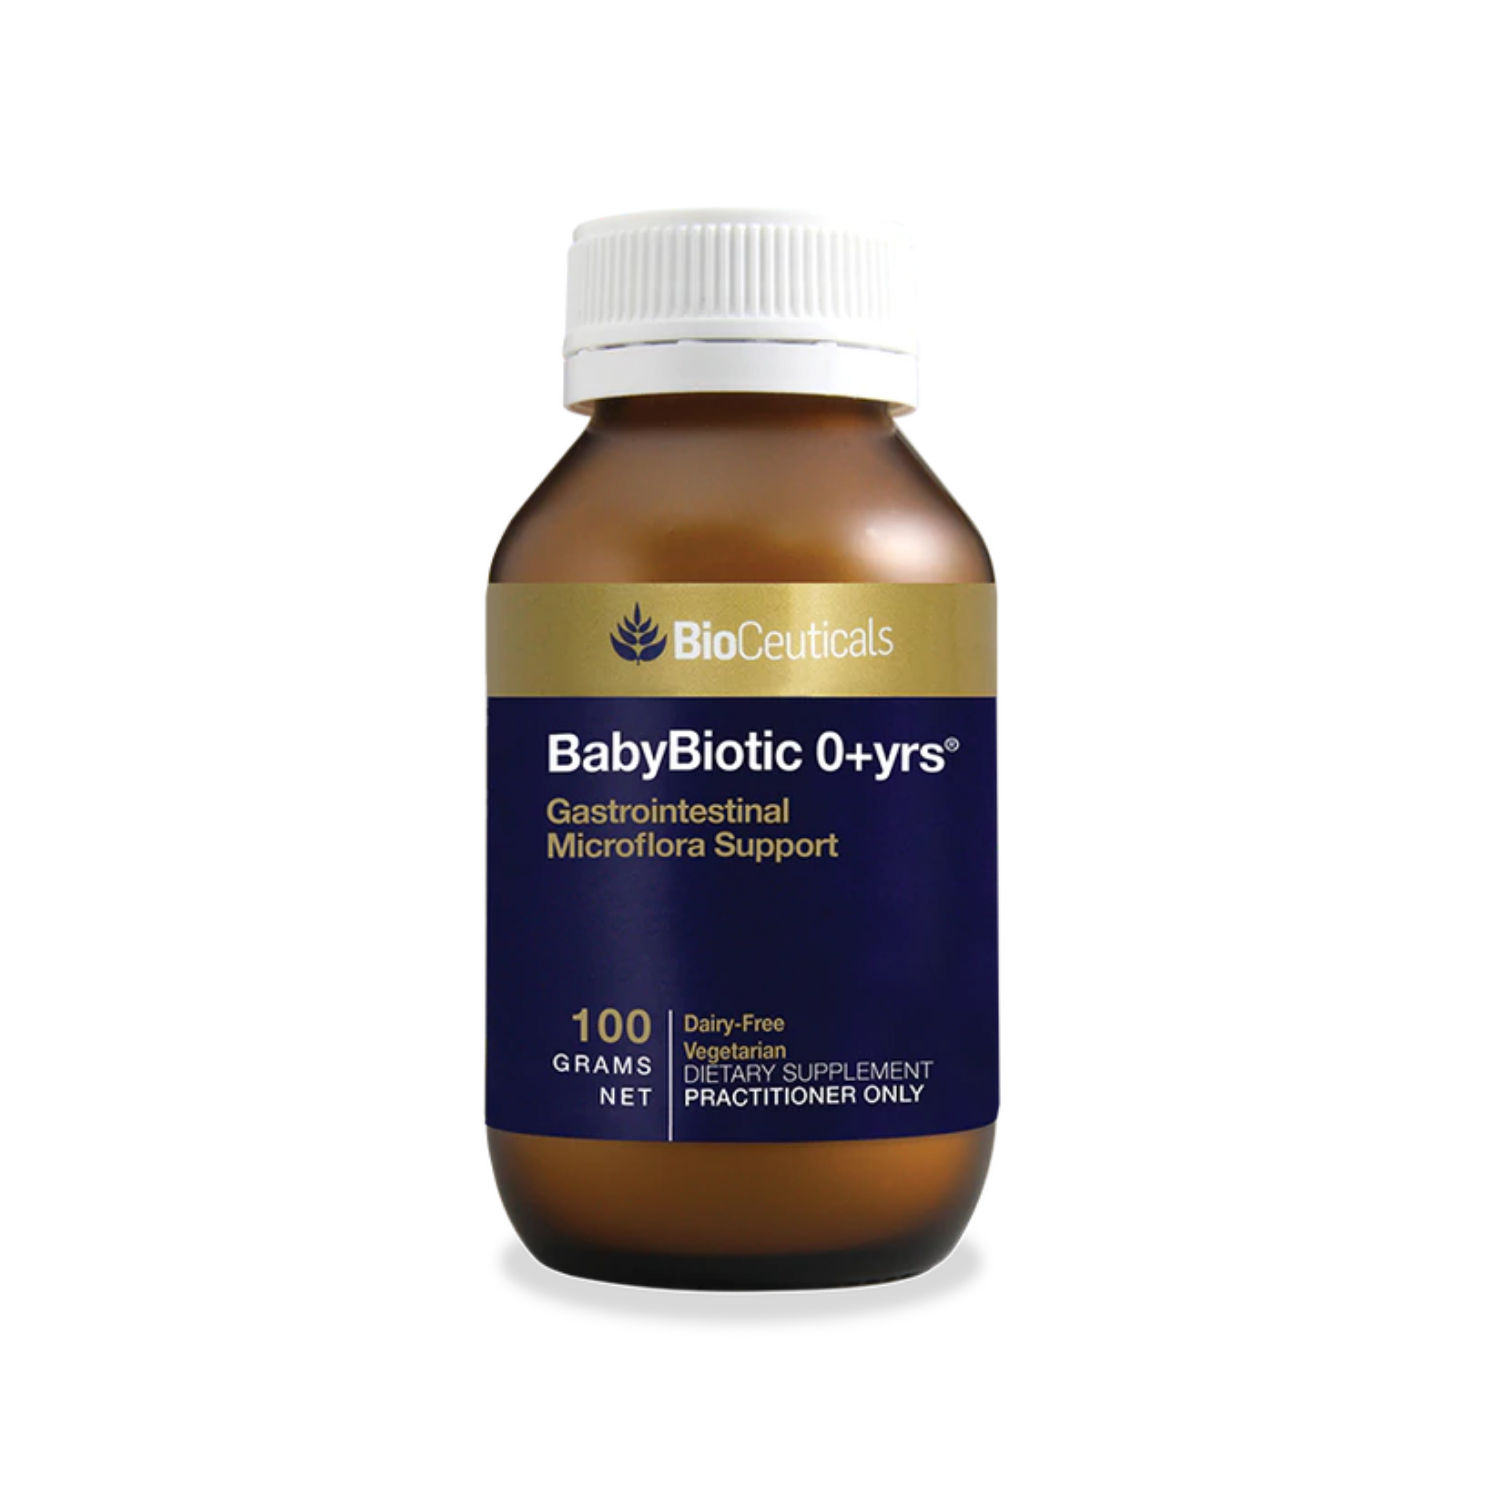 Bioceuticals BabyBiotic 0+yrs 100g Powder